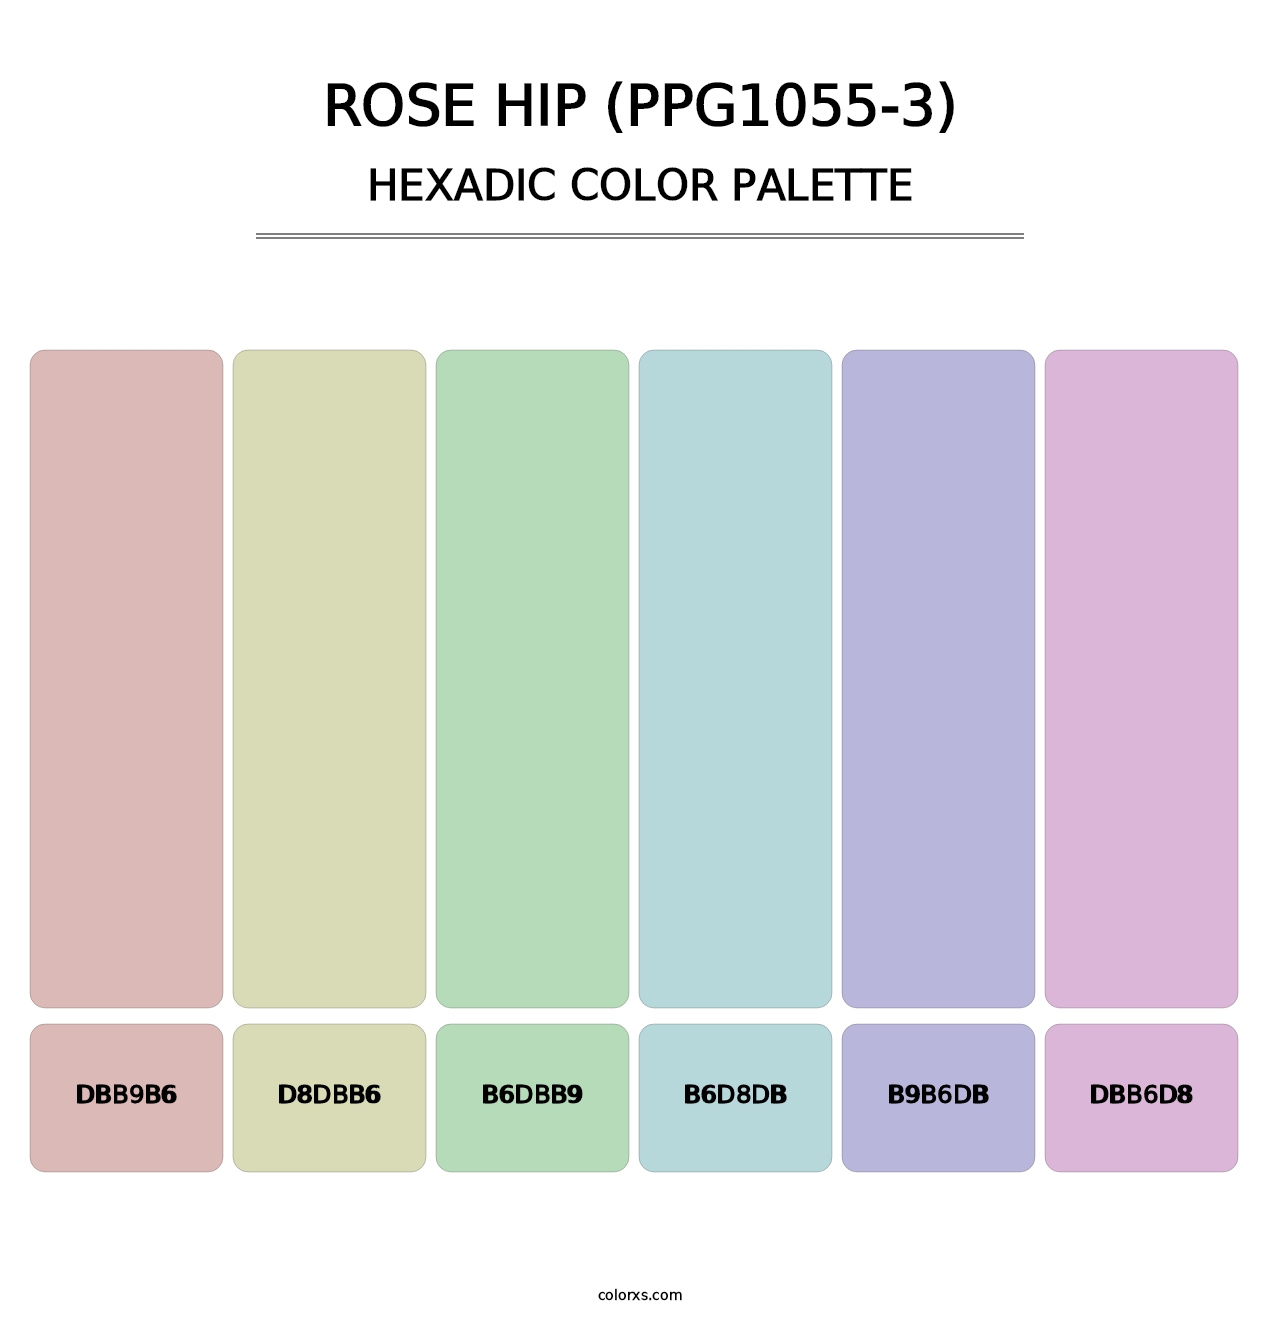 Rose Hip (PPG1055-3) - Hexadic Color Palette